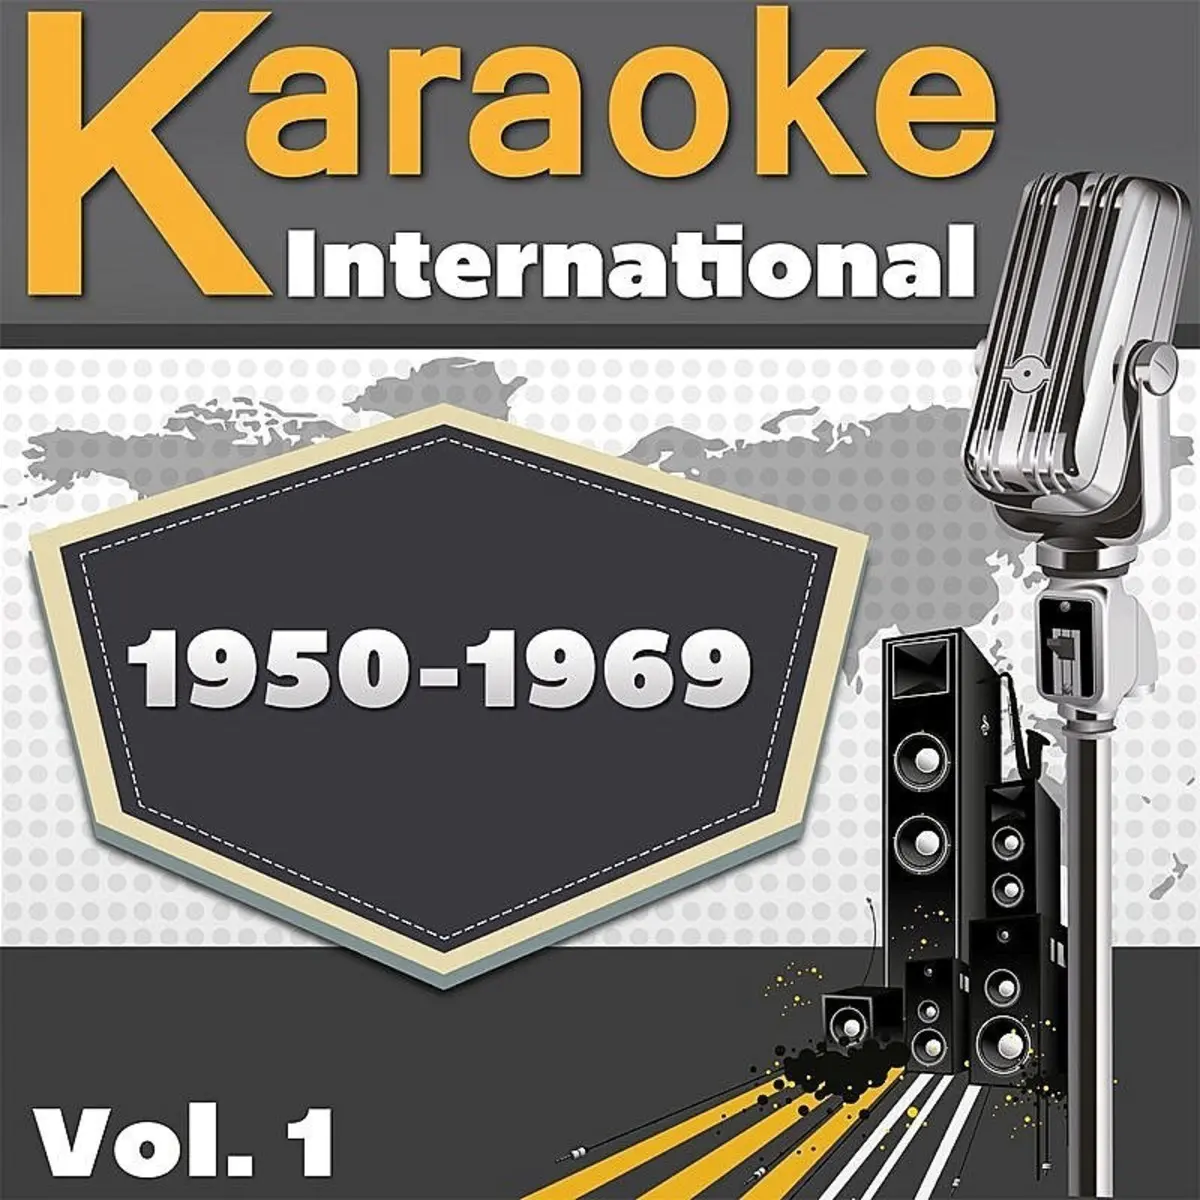 Mr Tambourine Man Karaoke Version Originally Performed By The Byrds Mp3 Song Download Karaoke International 1950 1969 Vol 1 Mr Tambourine Man Karaoke Version Originally Performed By The Byrds Song By Doc Maf